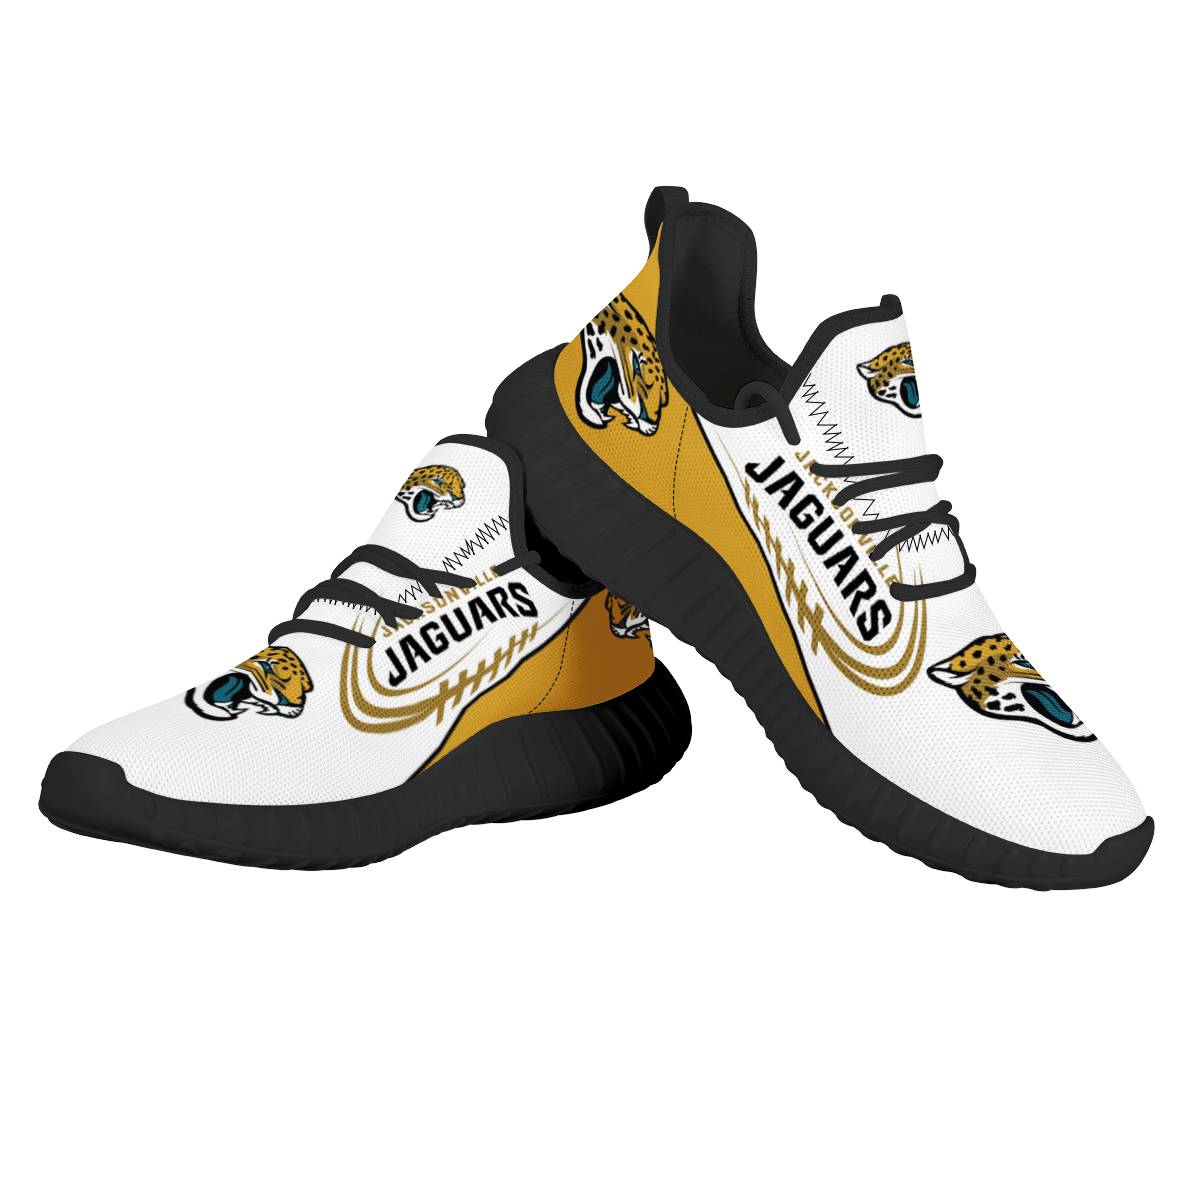 Women's NFL Jacksonville Jaguars Mesh Knit Sneakers/Shoes 001